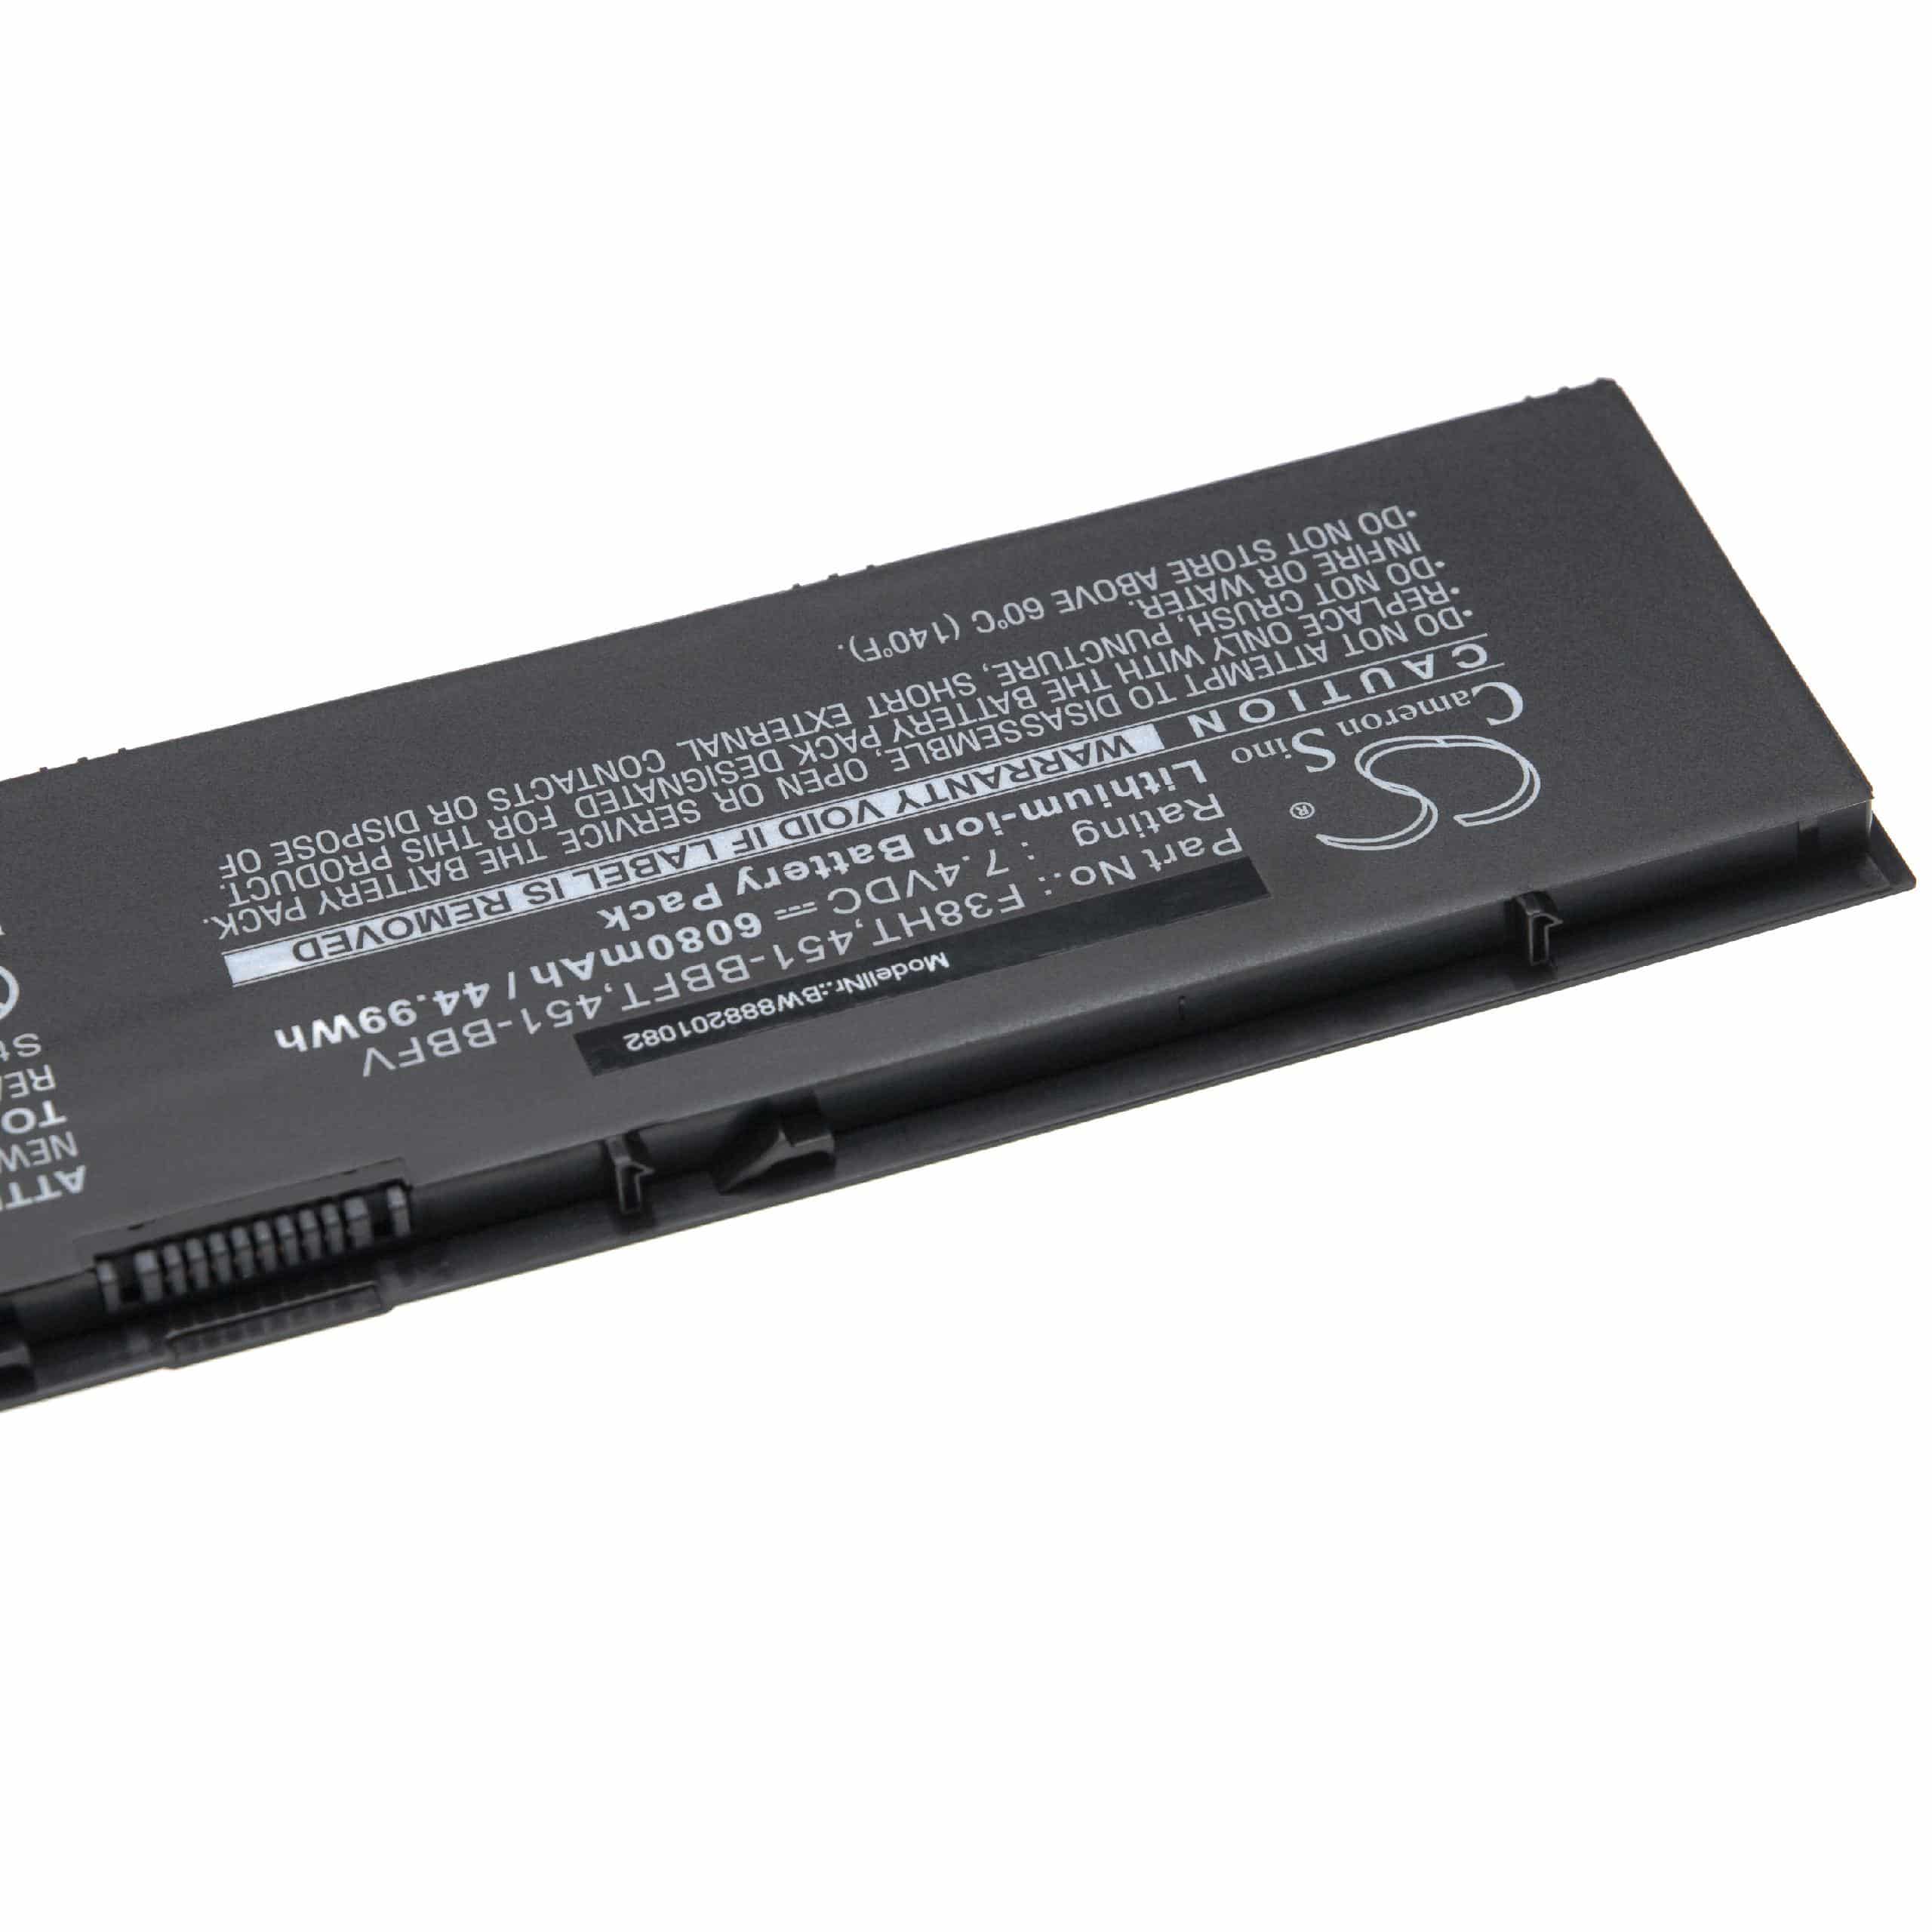 Akumulator do laptopa zamiennik Dell PFXCR, F38HT, 451-BBFY, 34GKR, 451-BBFT - 6080 mAh 7,4 V Li-Ion, czarny